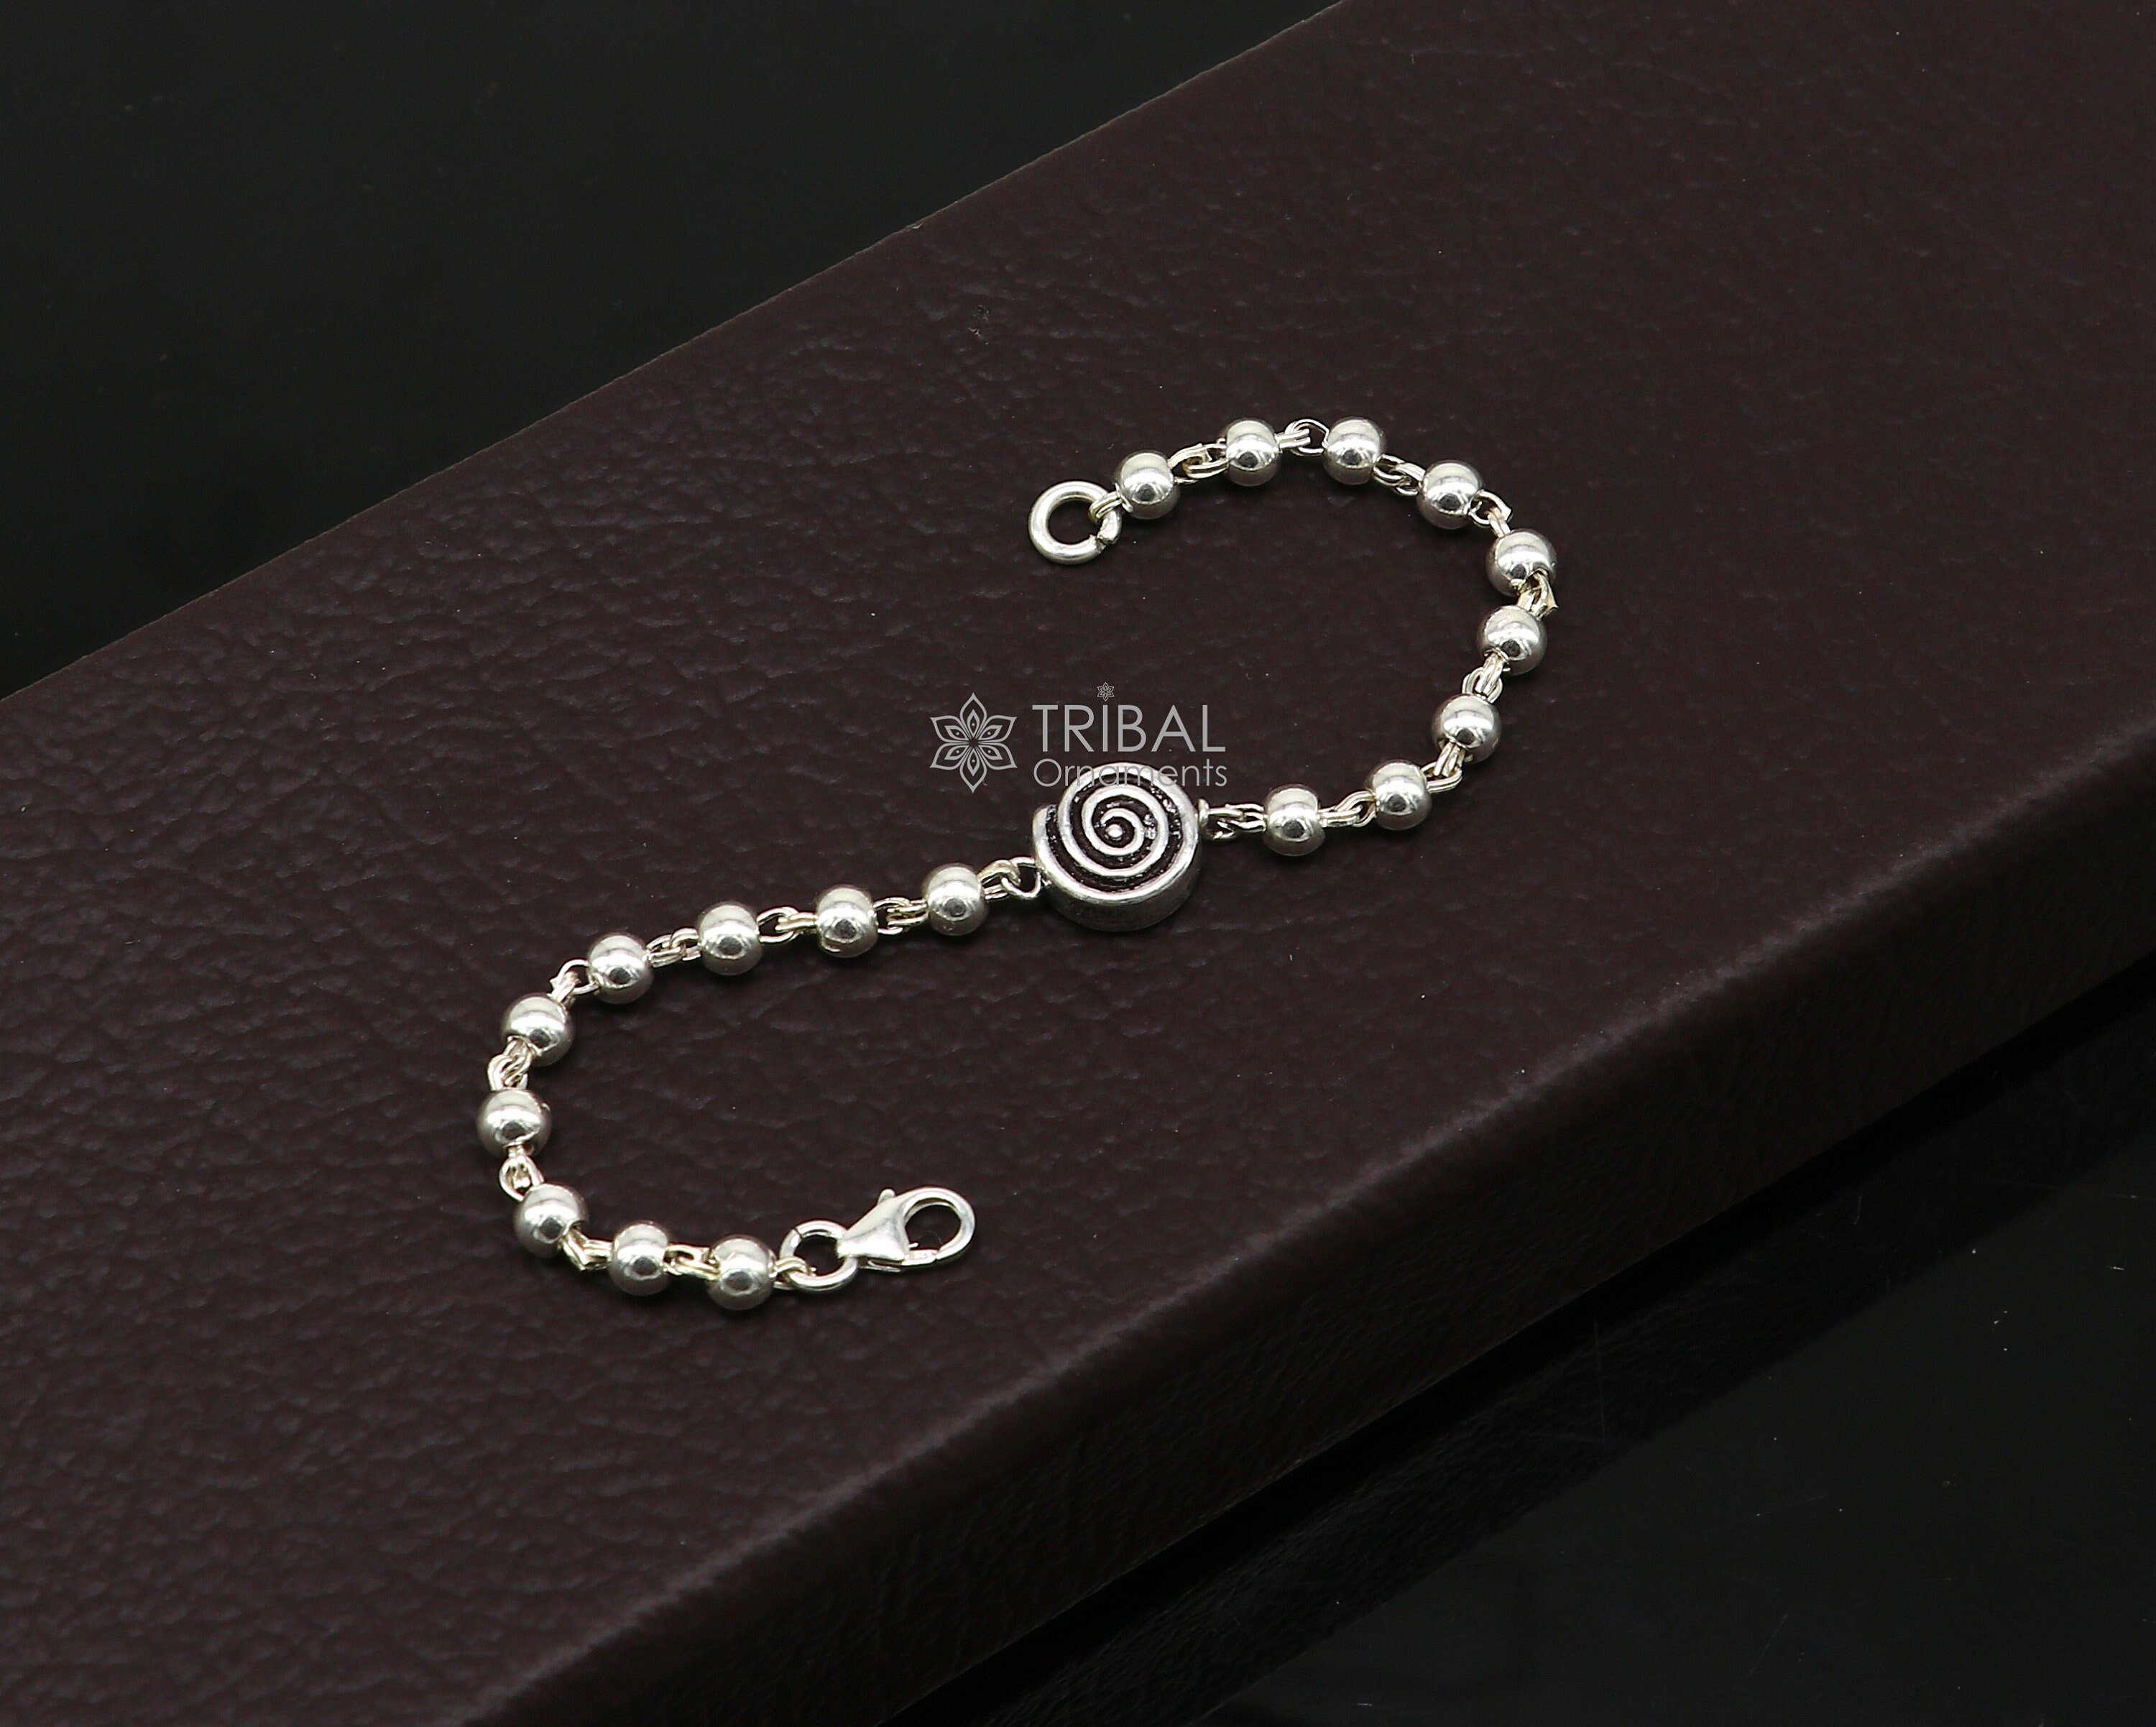 Amazon.com: Handmade 925 Sterling Silver Beads Bangle Bracelet Adjustable  Sterling Silver Bangles for Women : Handmade Products